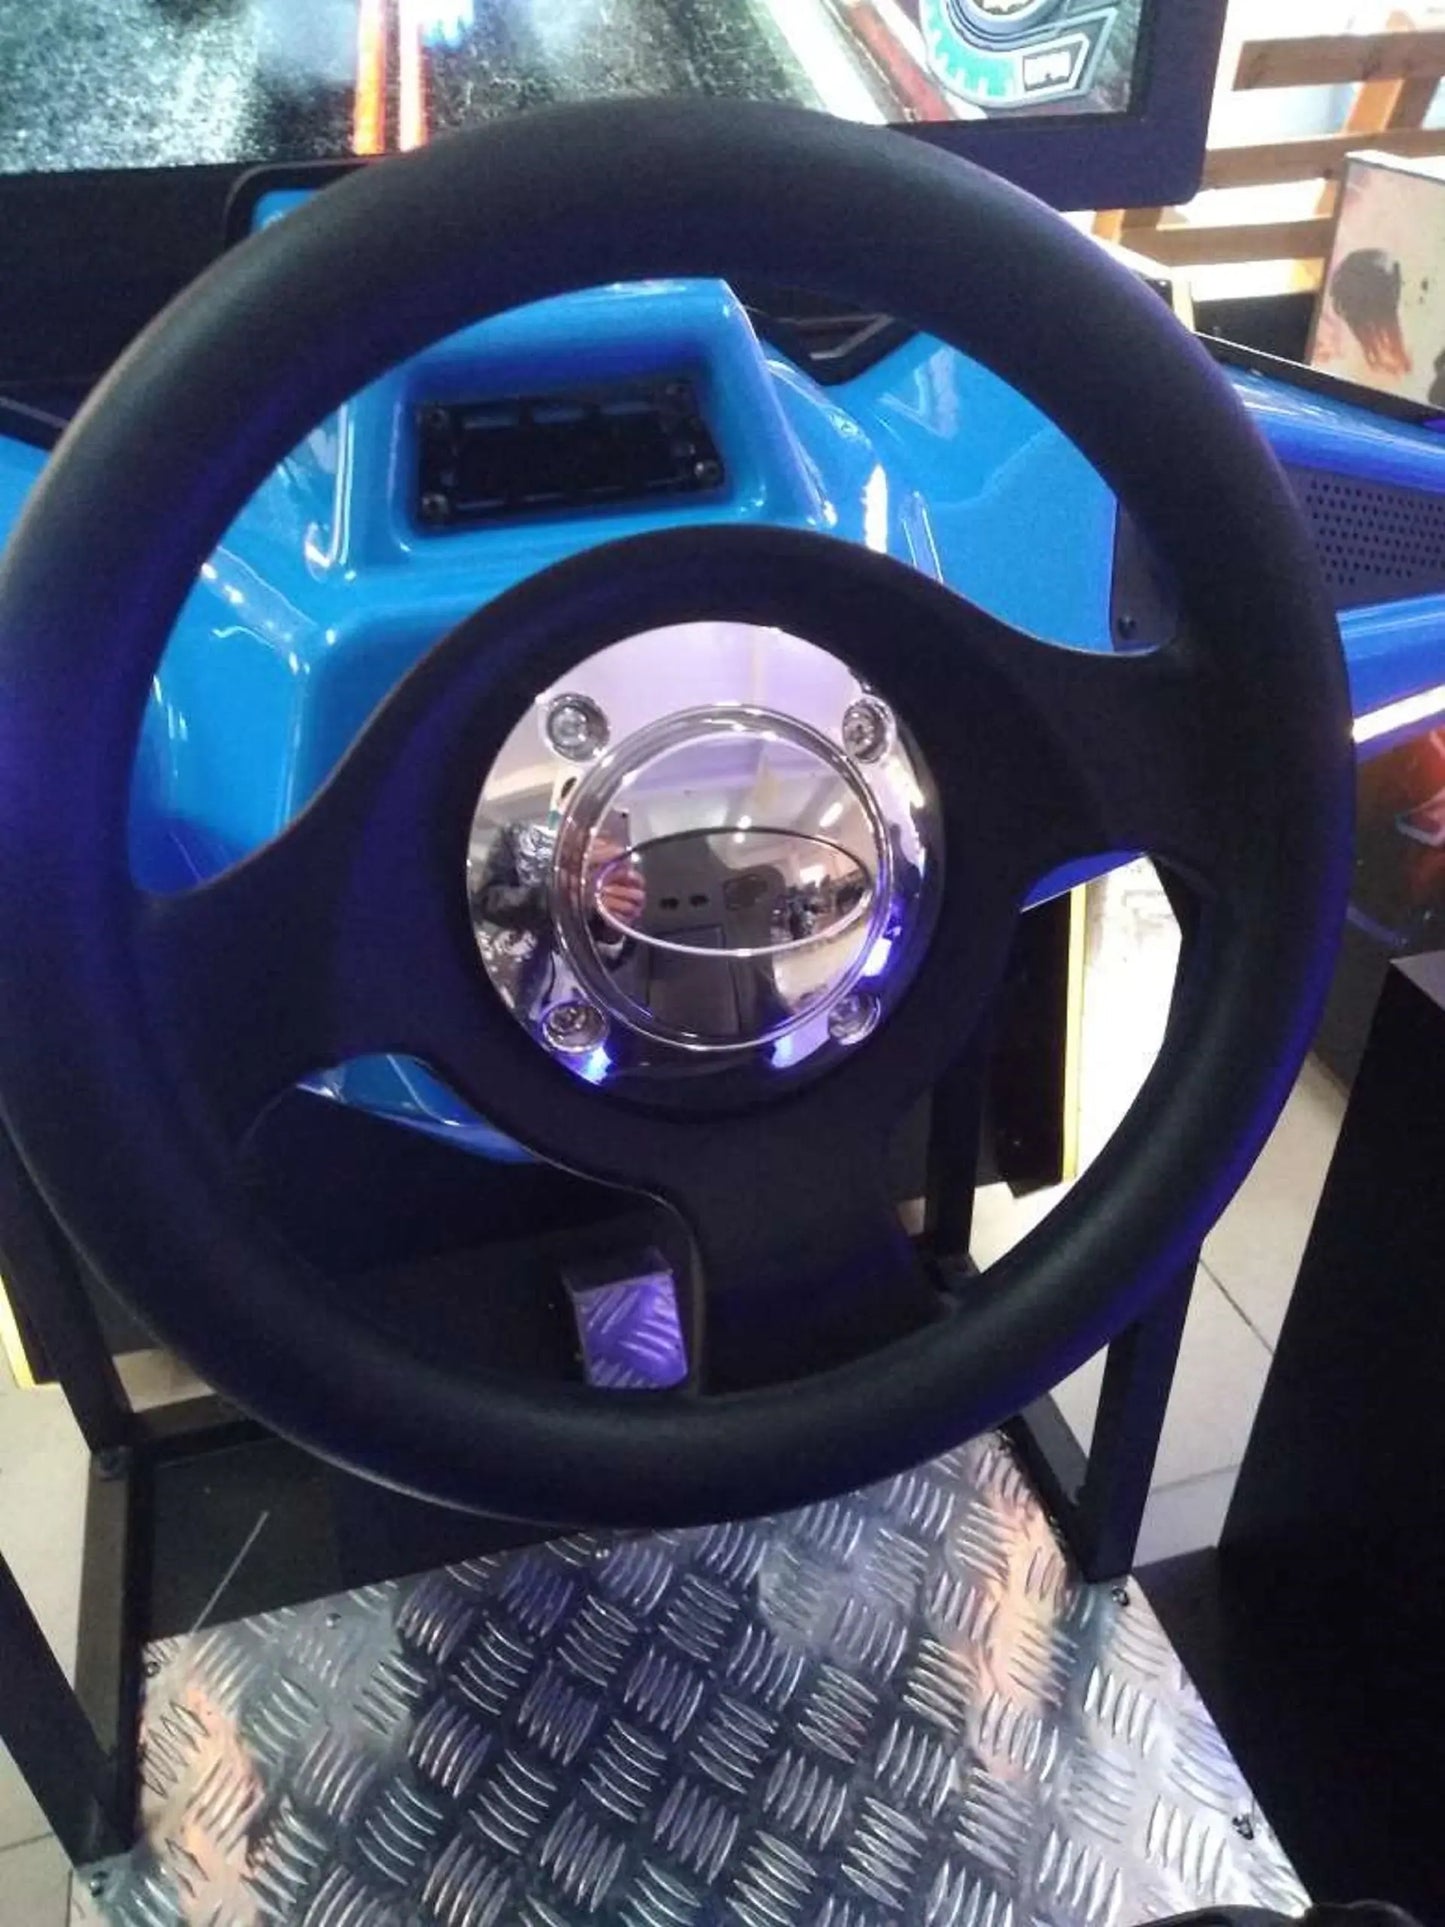 Cruising-Blast-Racing-Game-Machine-Cruis'n-Blast-Simulator-Racing-Car-Dynamic-Storm-game-Tomy-Arcade